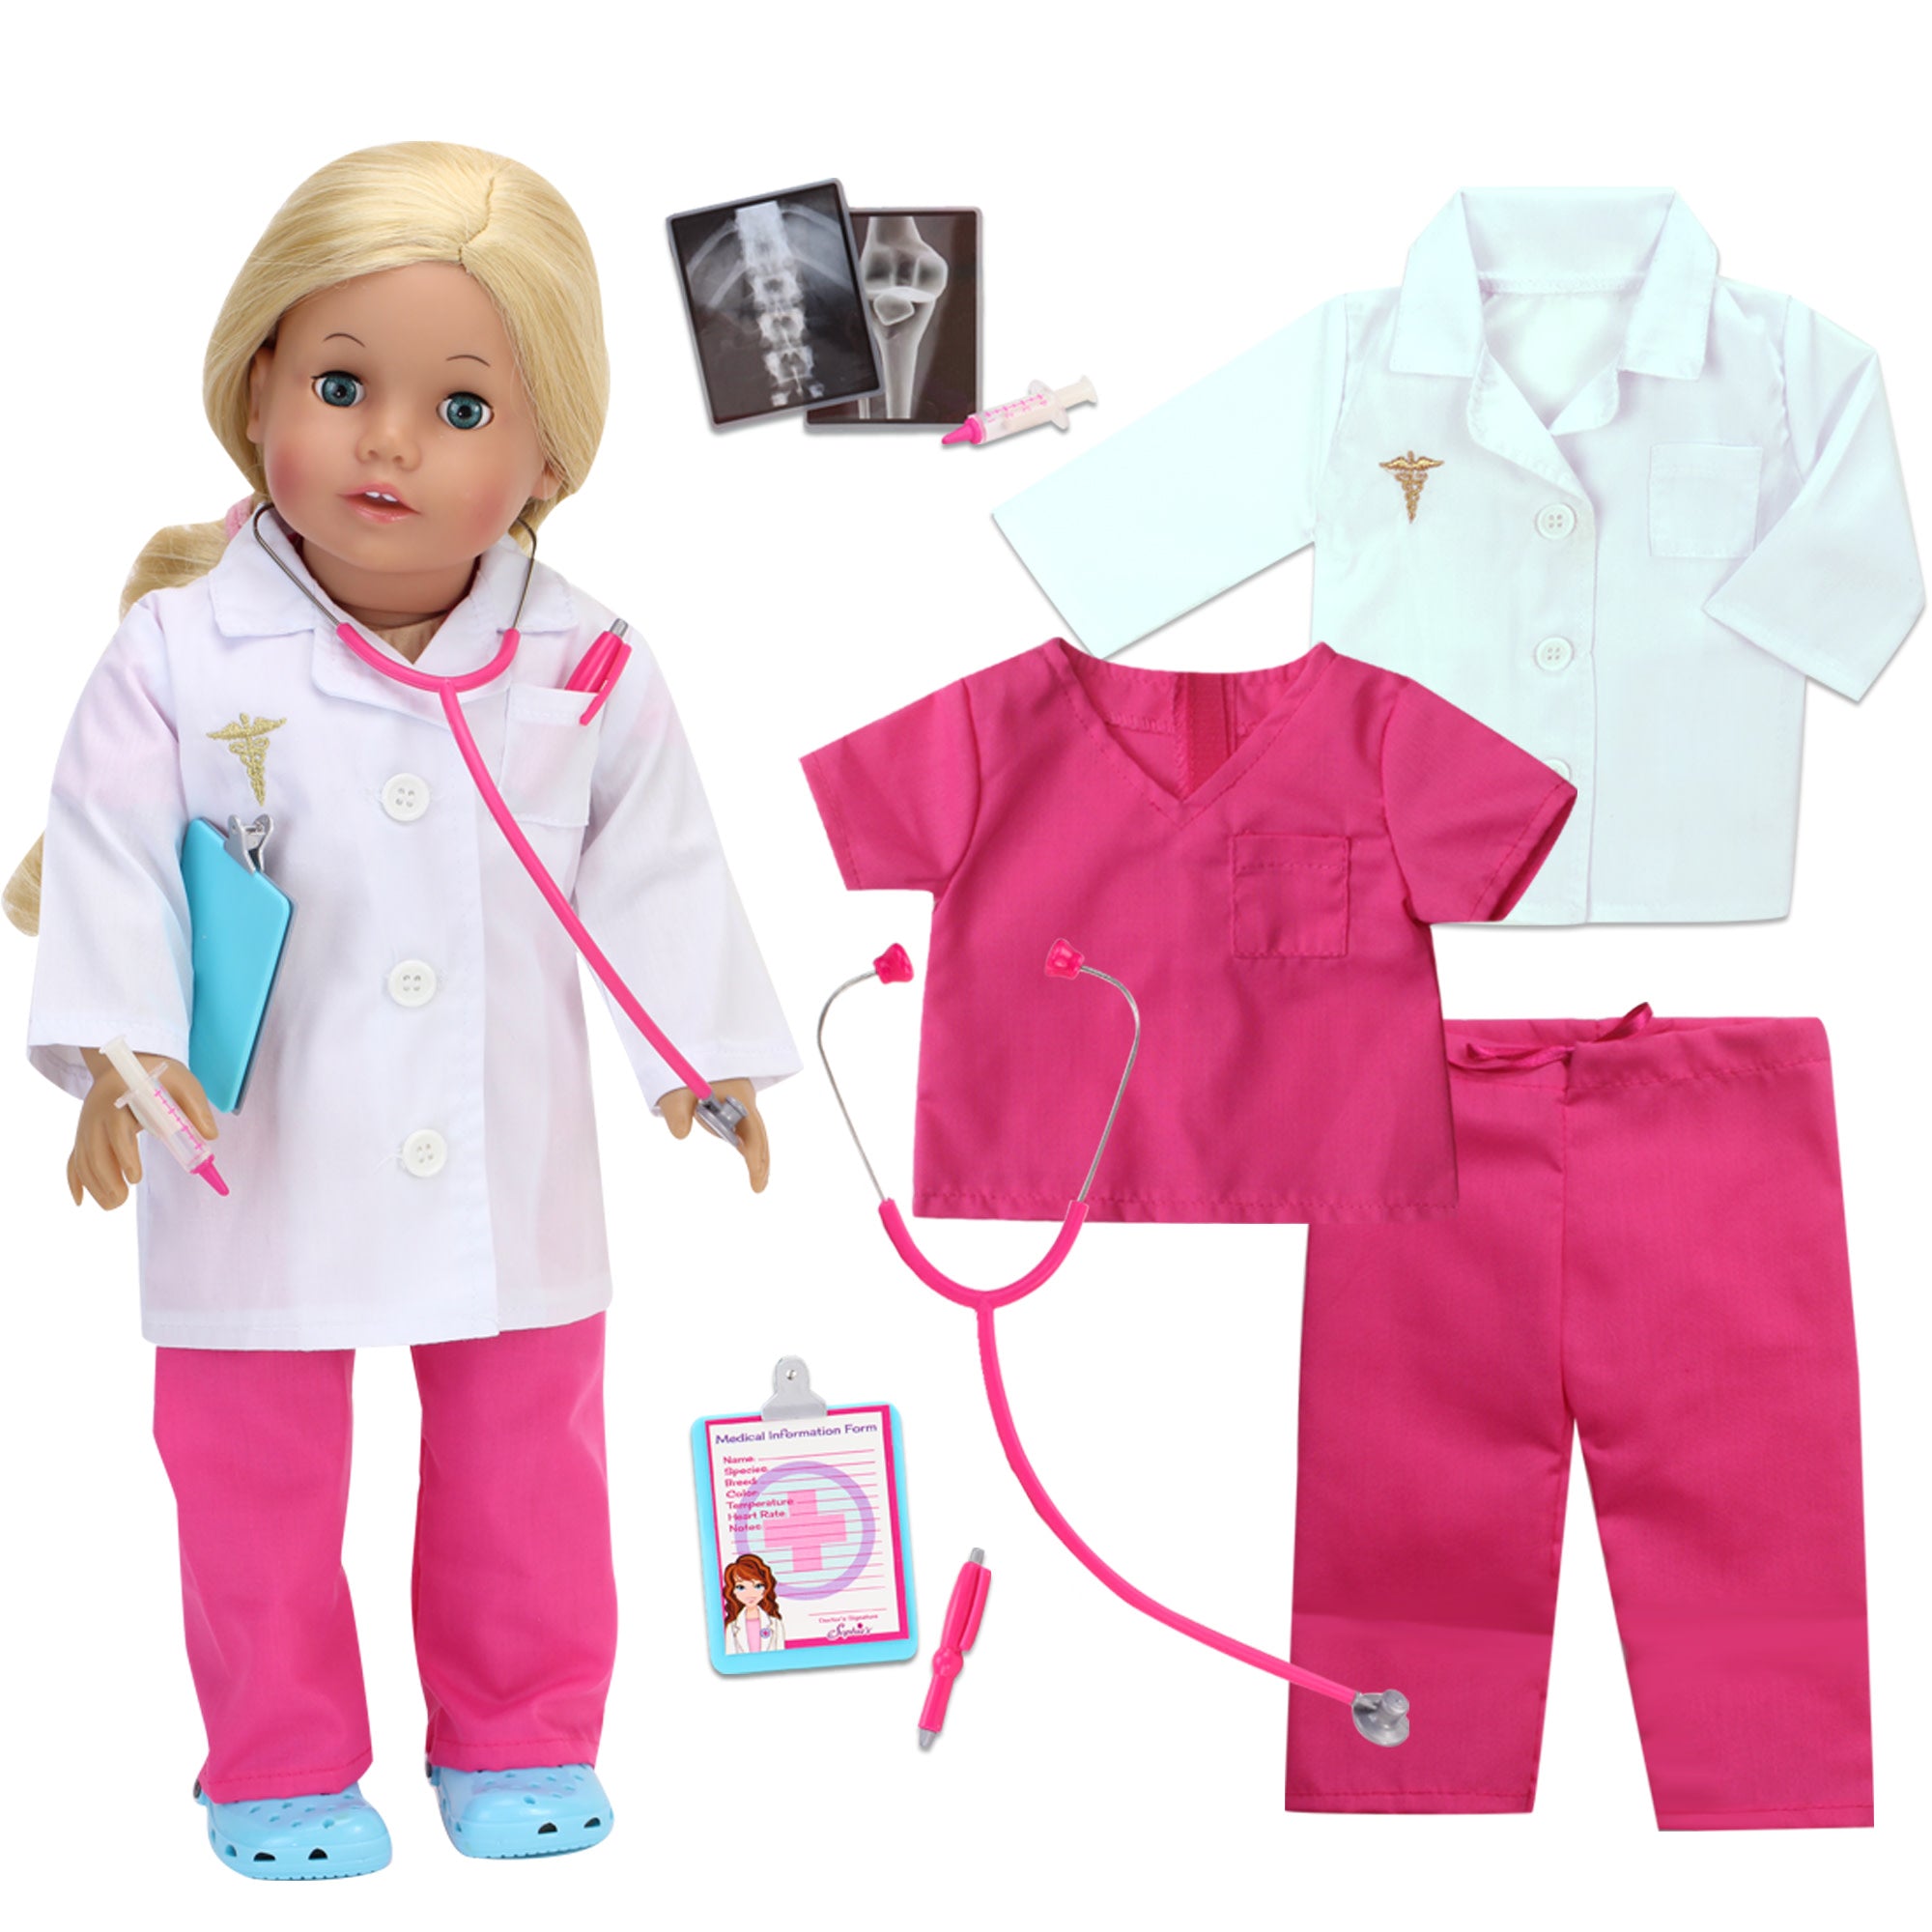 Sophias Doll Doctor and Medical Accessories Set for 18" Dolls, Pink